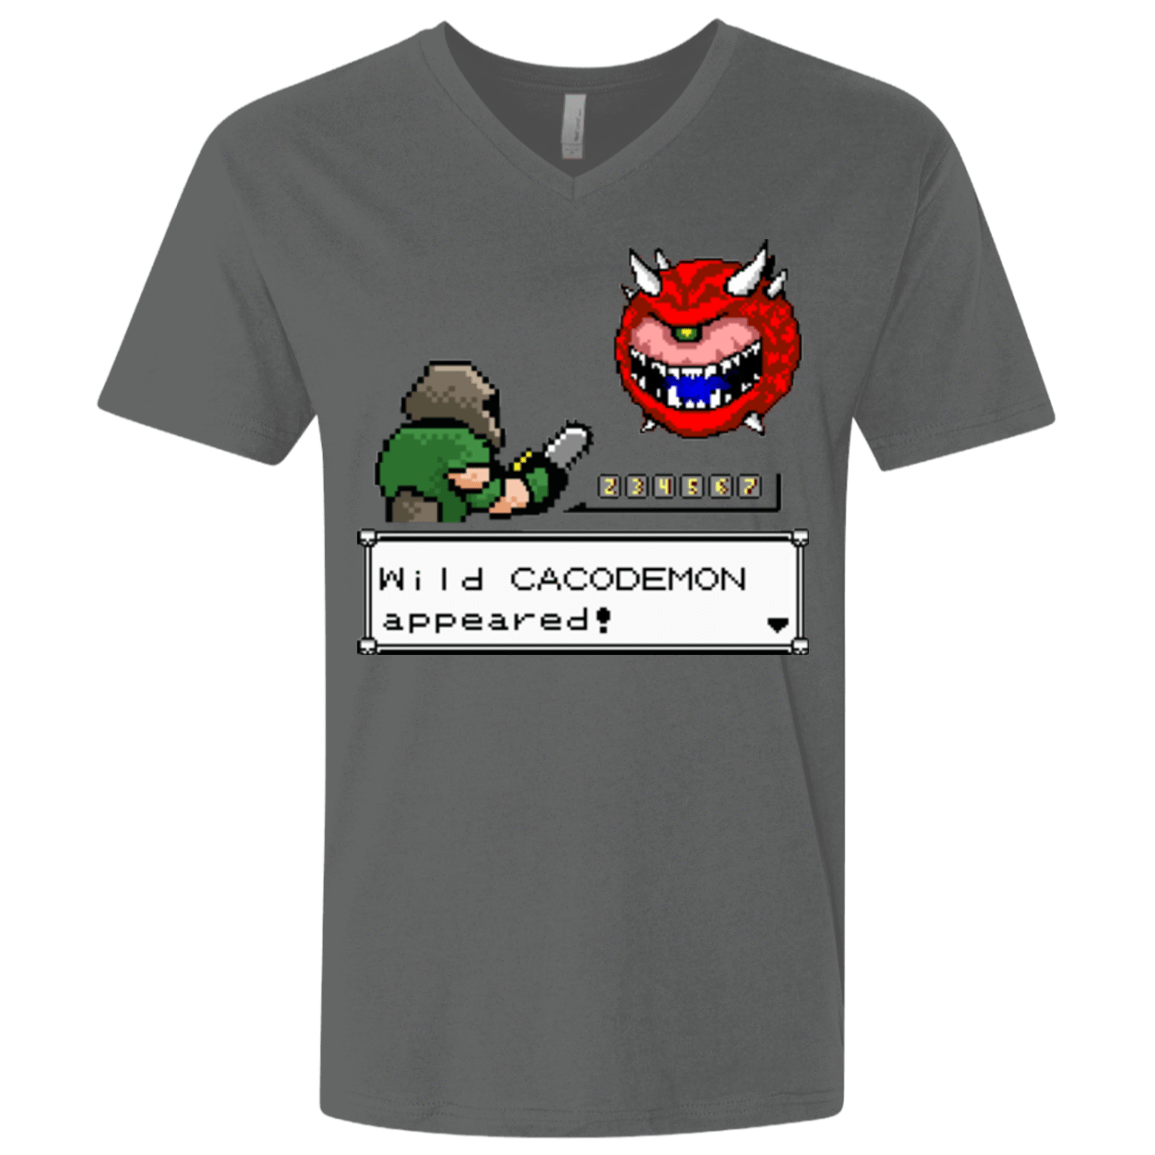 T-Shirts Heavy Metal / X-Small A Wild Cacodemon Men's Premium V-Neck